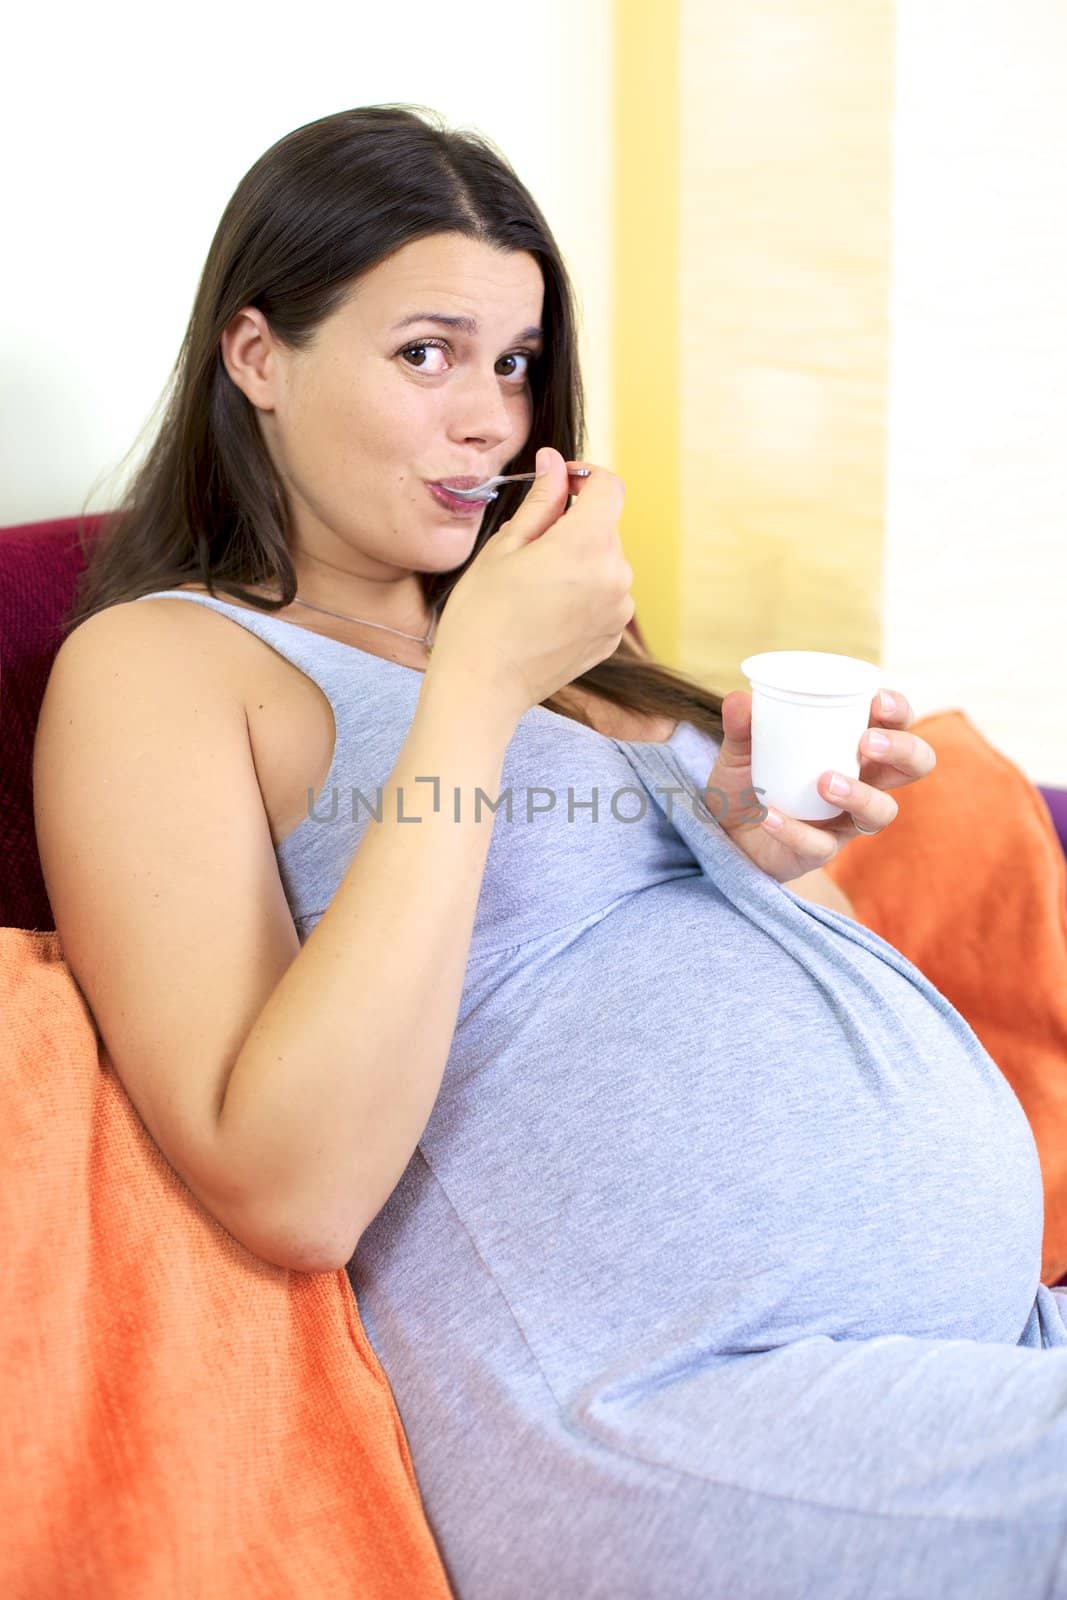 Happy pregnant woman eating yogurt at home by fmarsicano